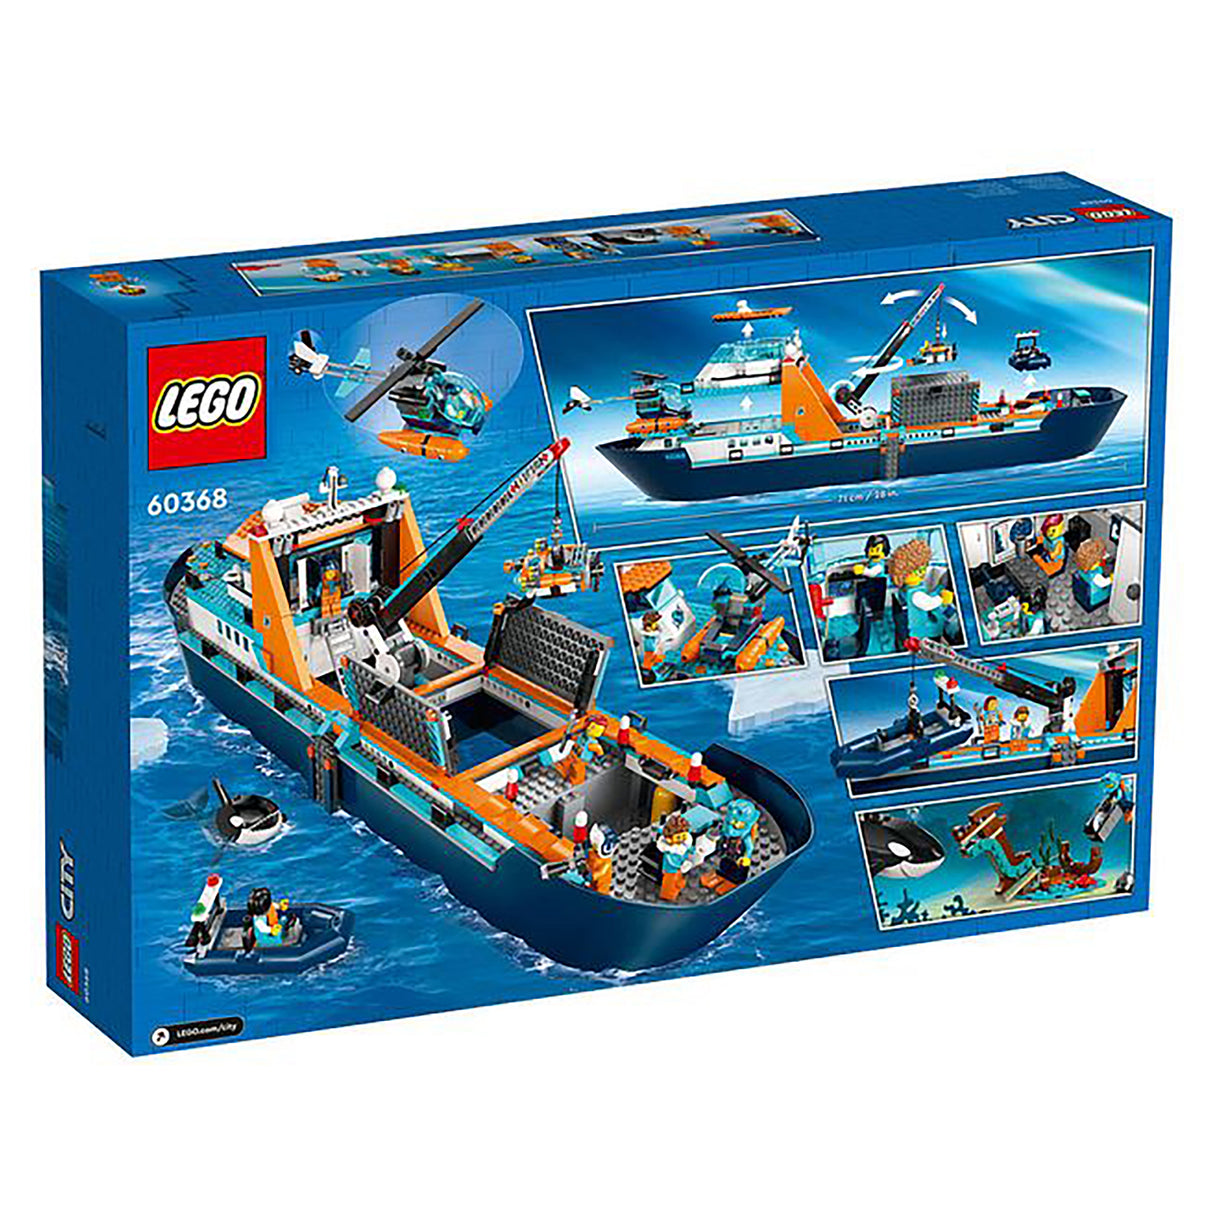 LEGO City Arctic Explorer Ship 60368 (815 pieces)